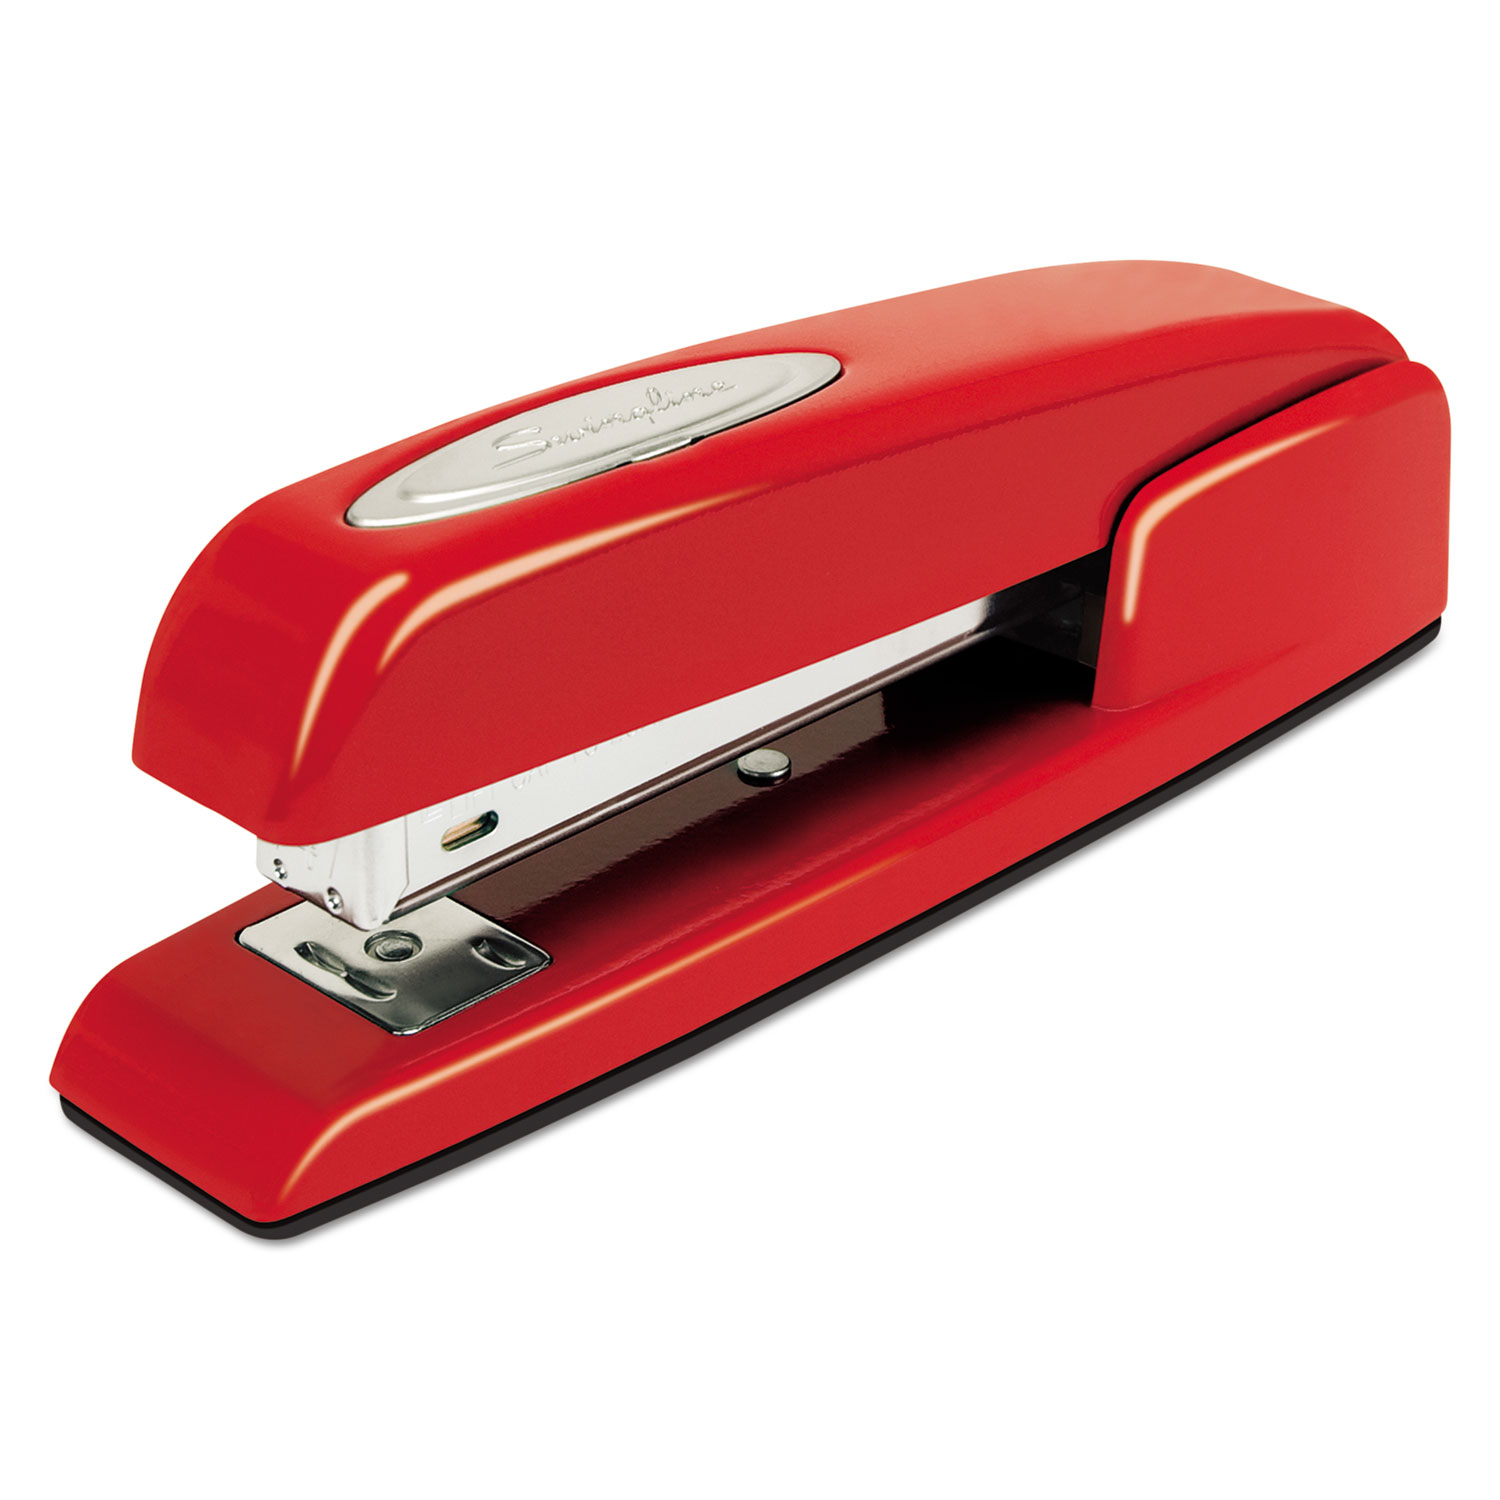 Xingli XL-207 Desk Stapler